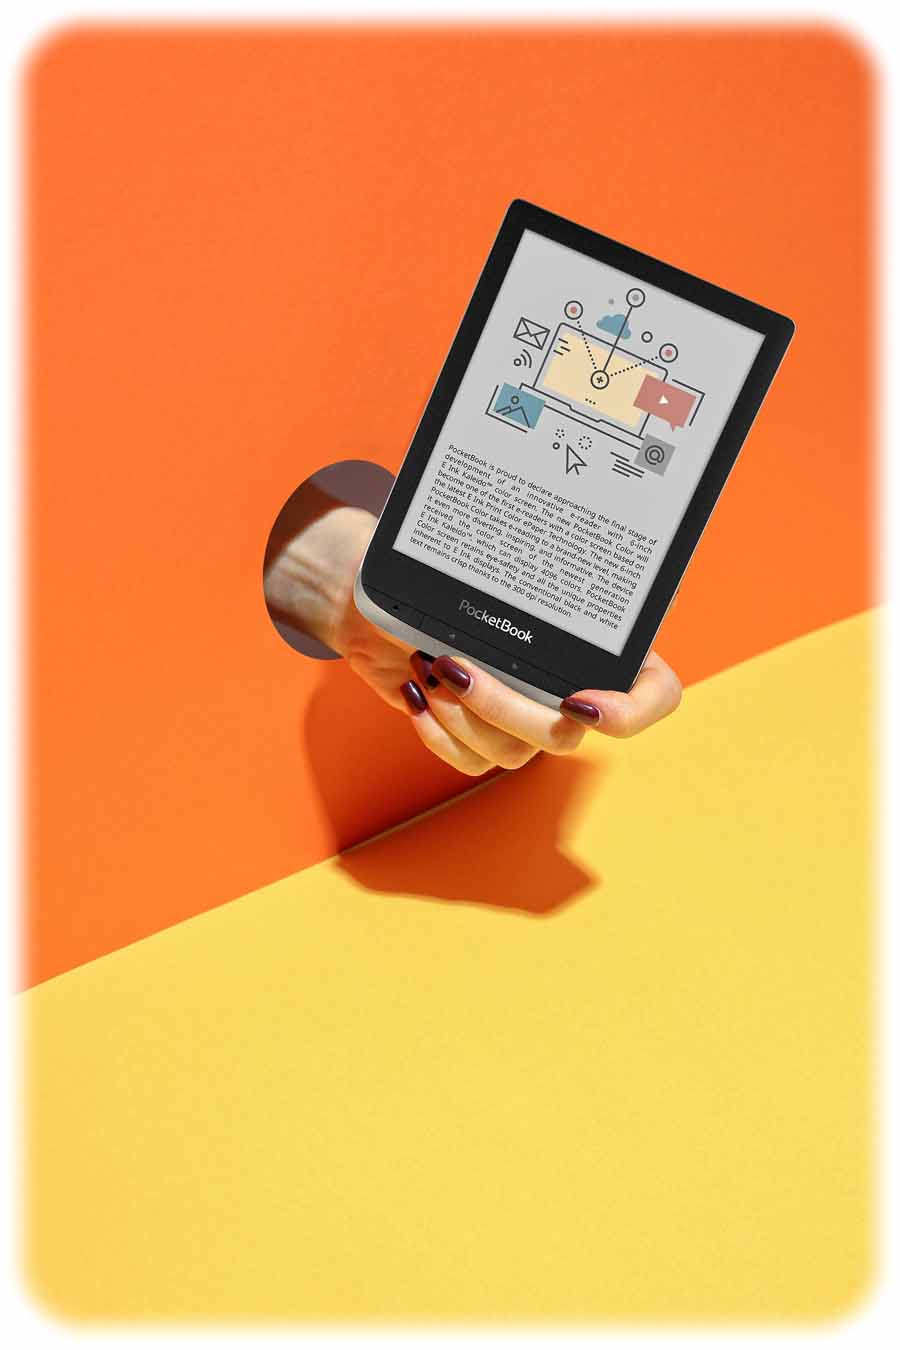 Das neue Farb-Lesegerät "Pocketbook Color" für farbige digitale Literatur soll ab Herbst 2020 verfügbar sei, hat Pocketbook in Radebeul angekündigt. Foto: Pocketbook/Shan Corp.